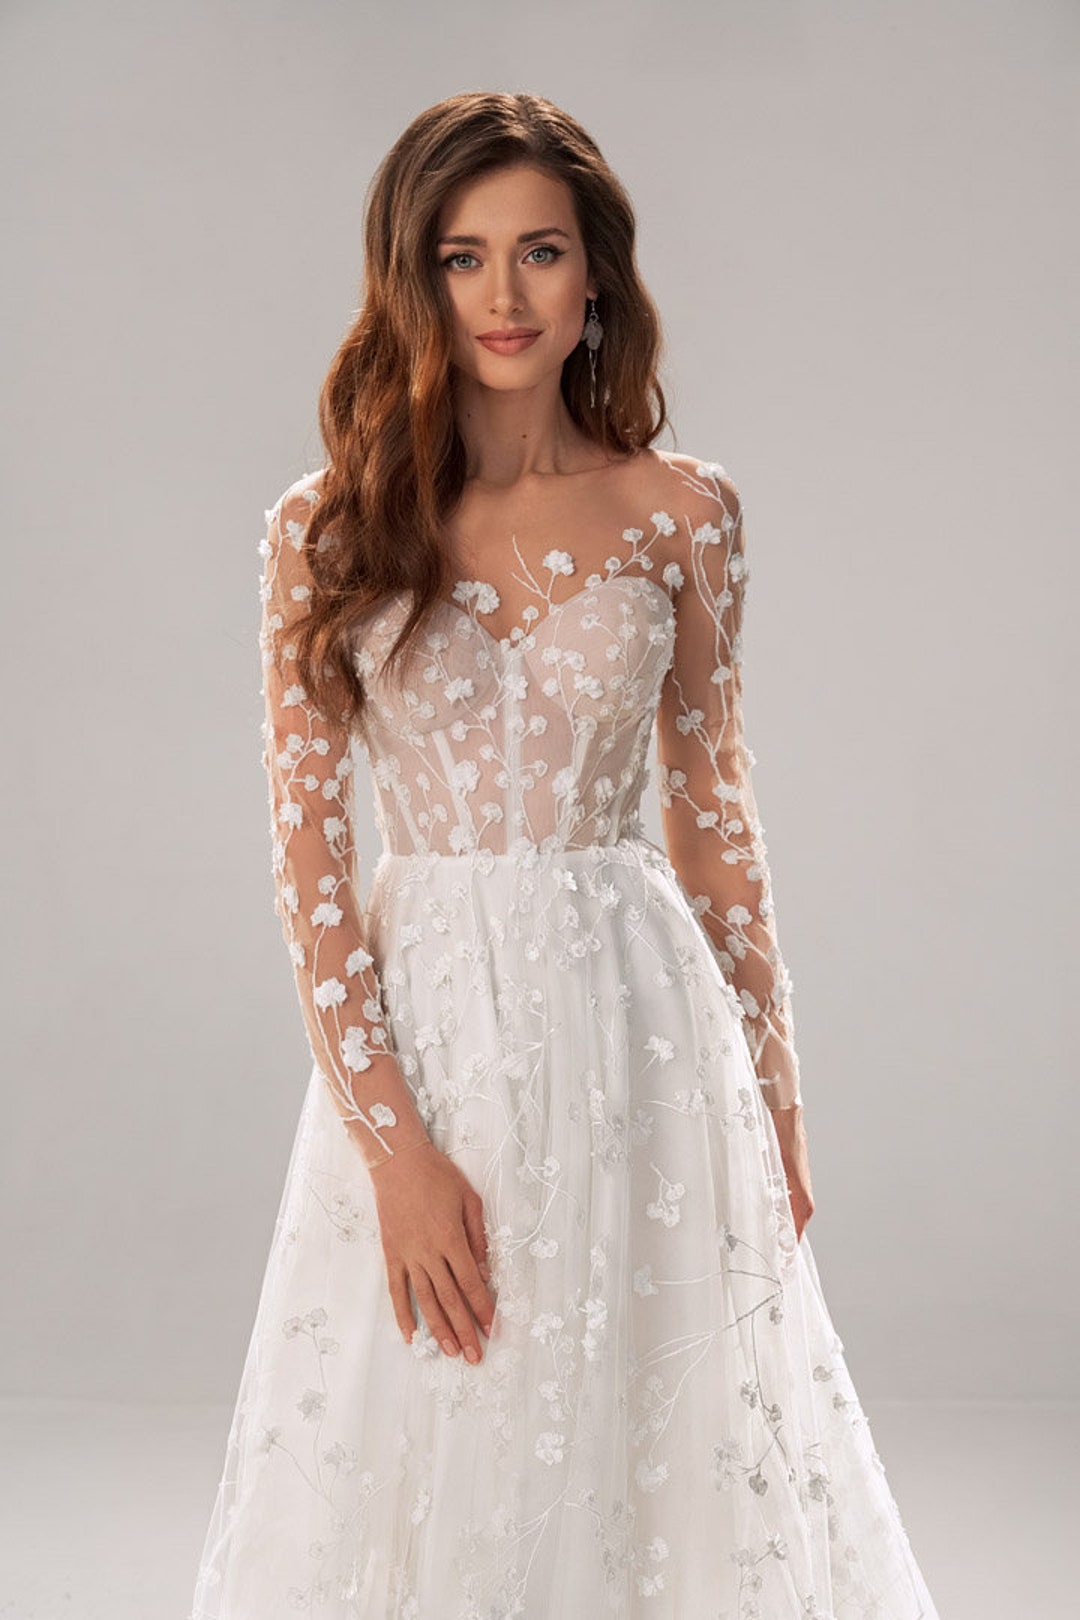 loveangeldress Luxury Rhinestones Wedding Dress with Illusion Long Sleeves US16 / Ivory